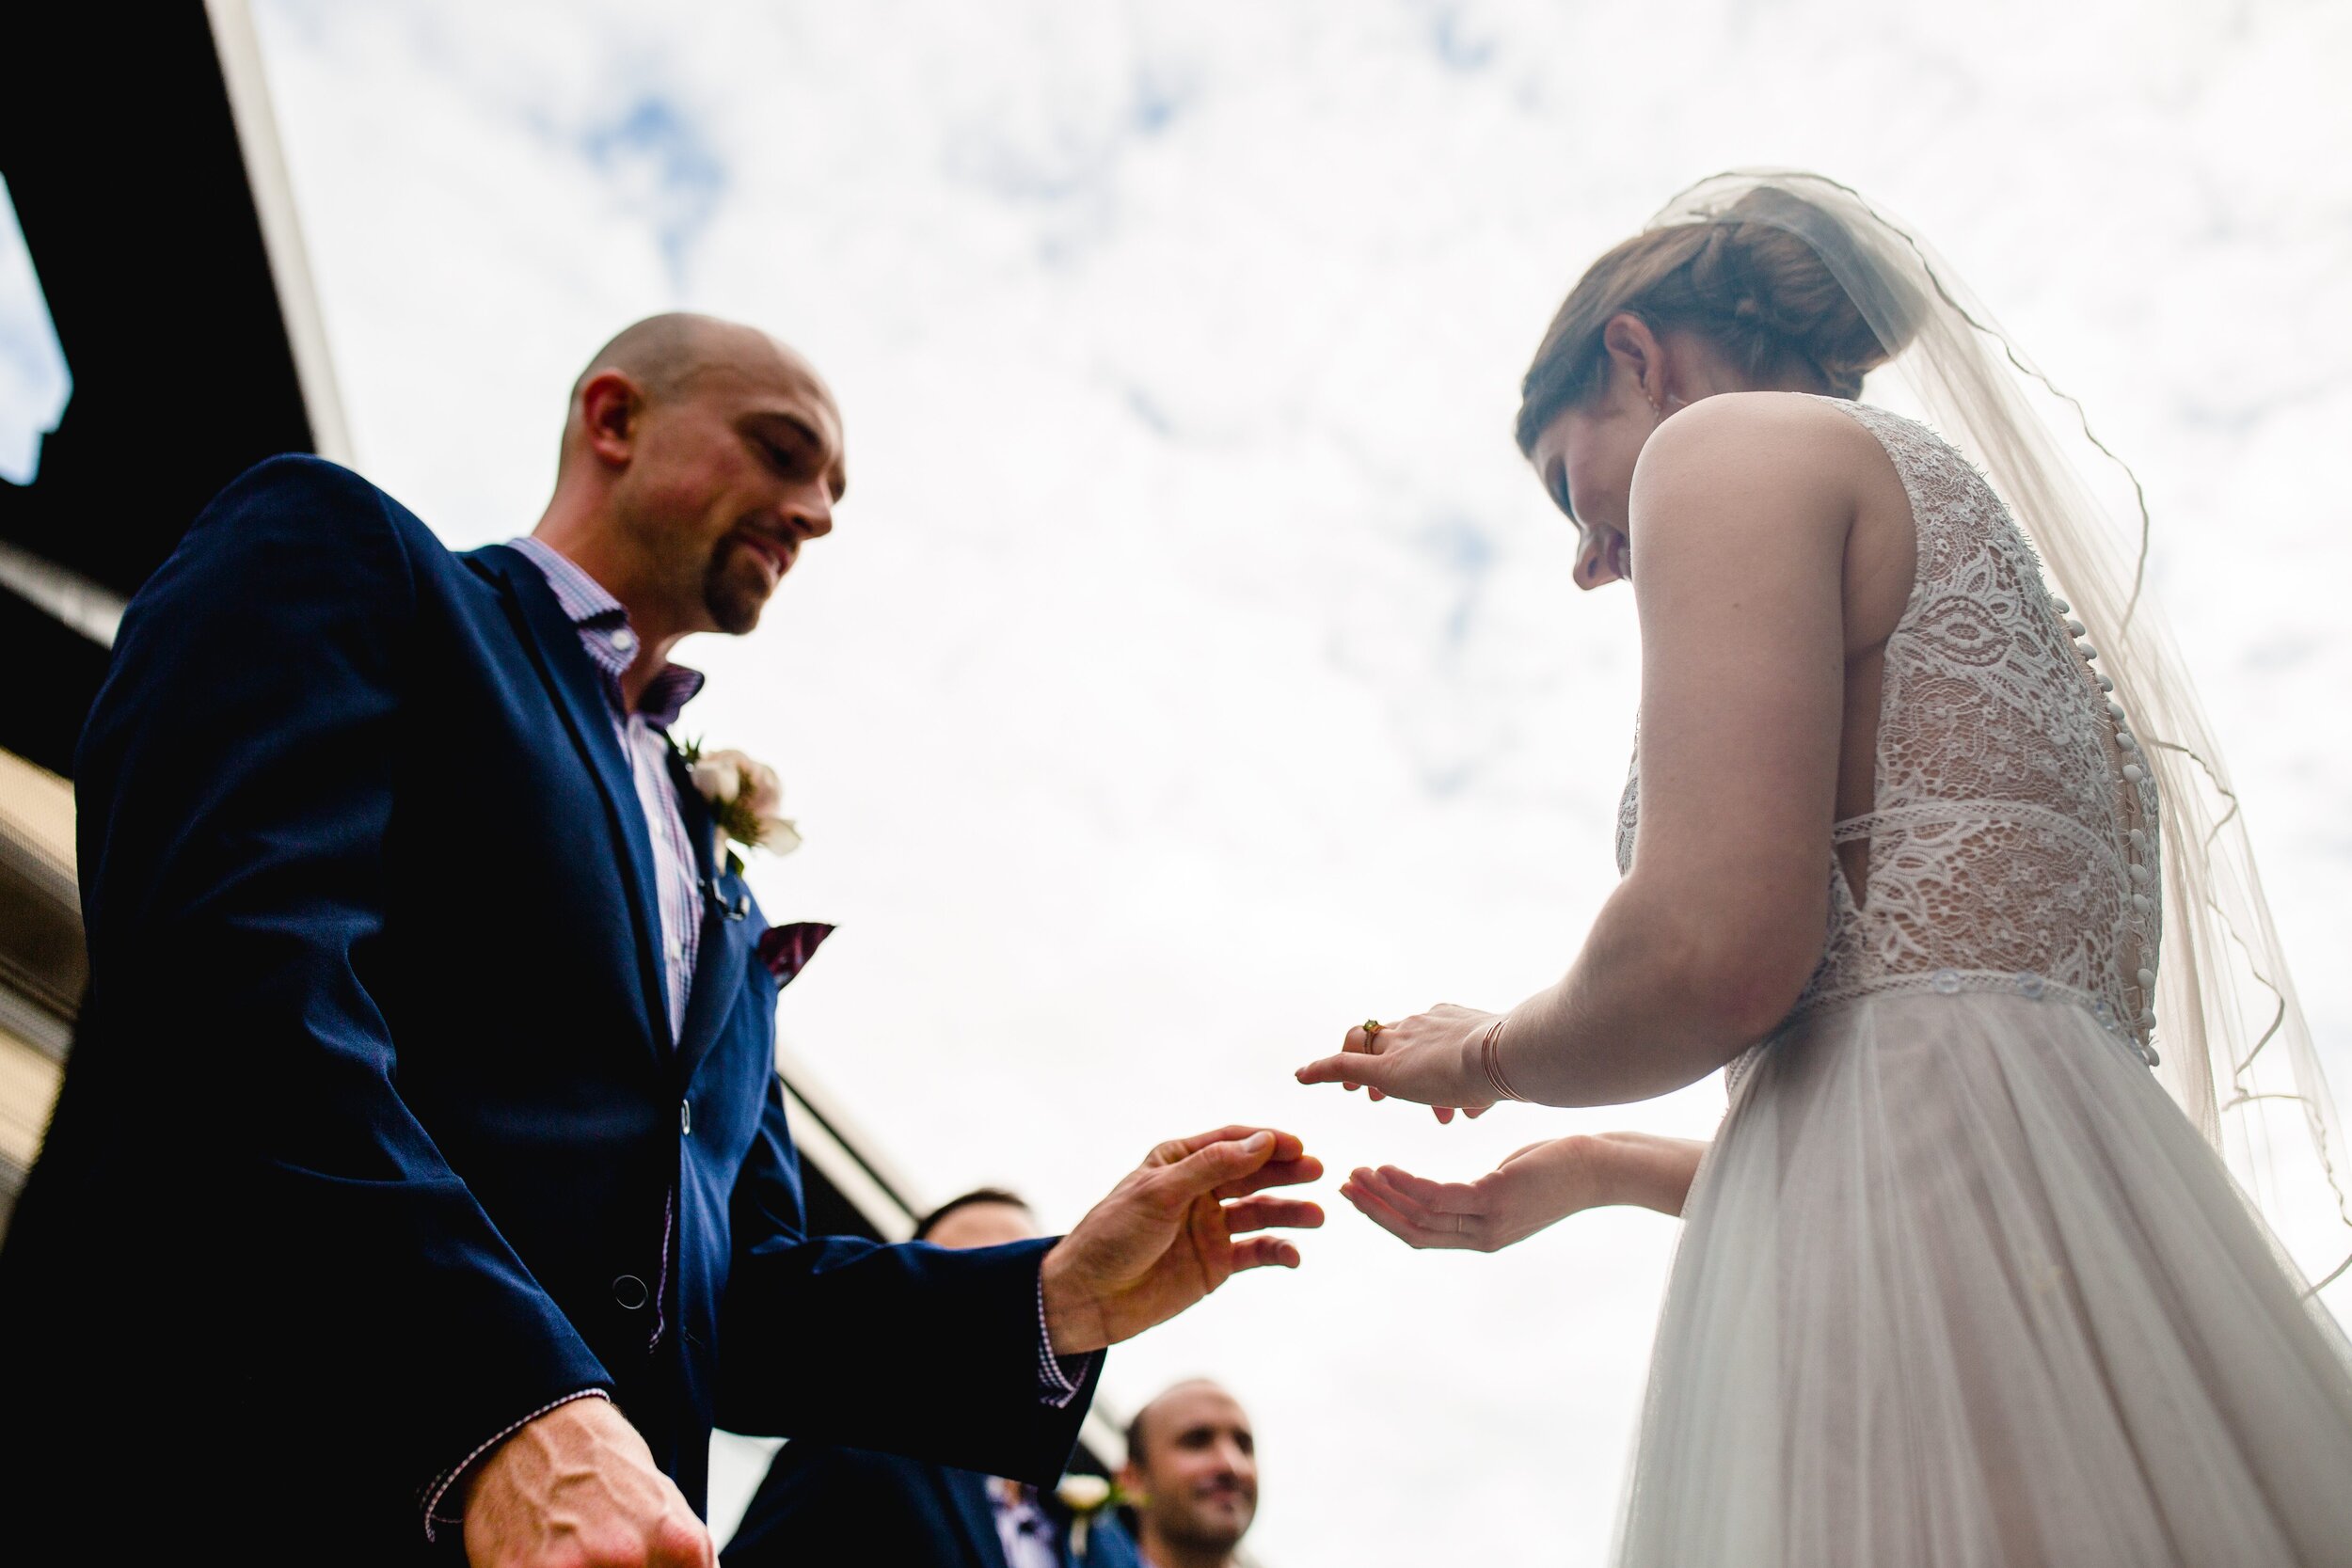 bride-putting-ring-on-groom-hand.jpg